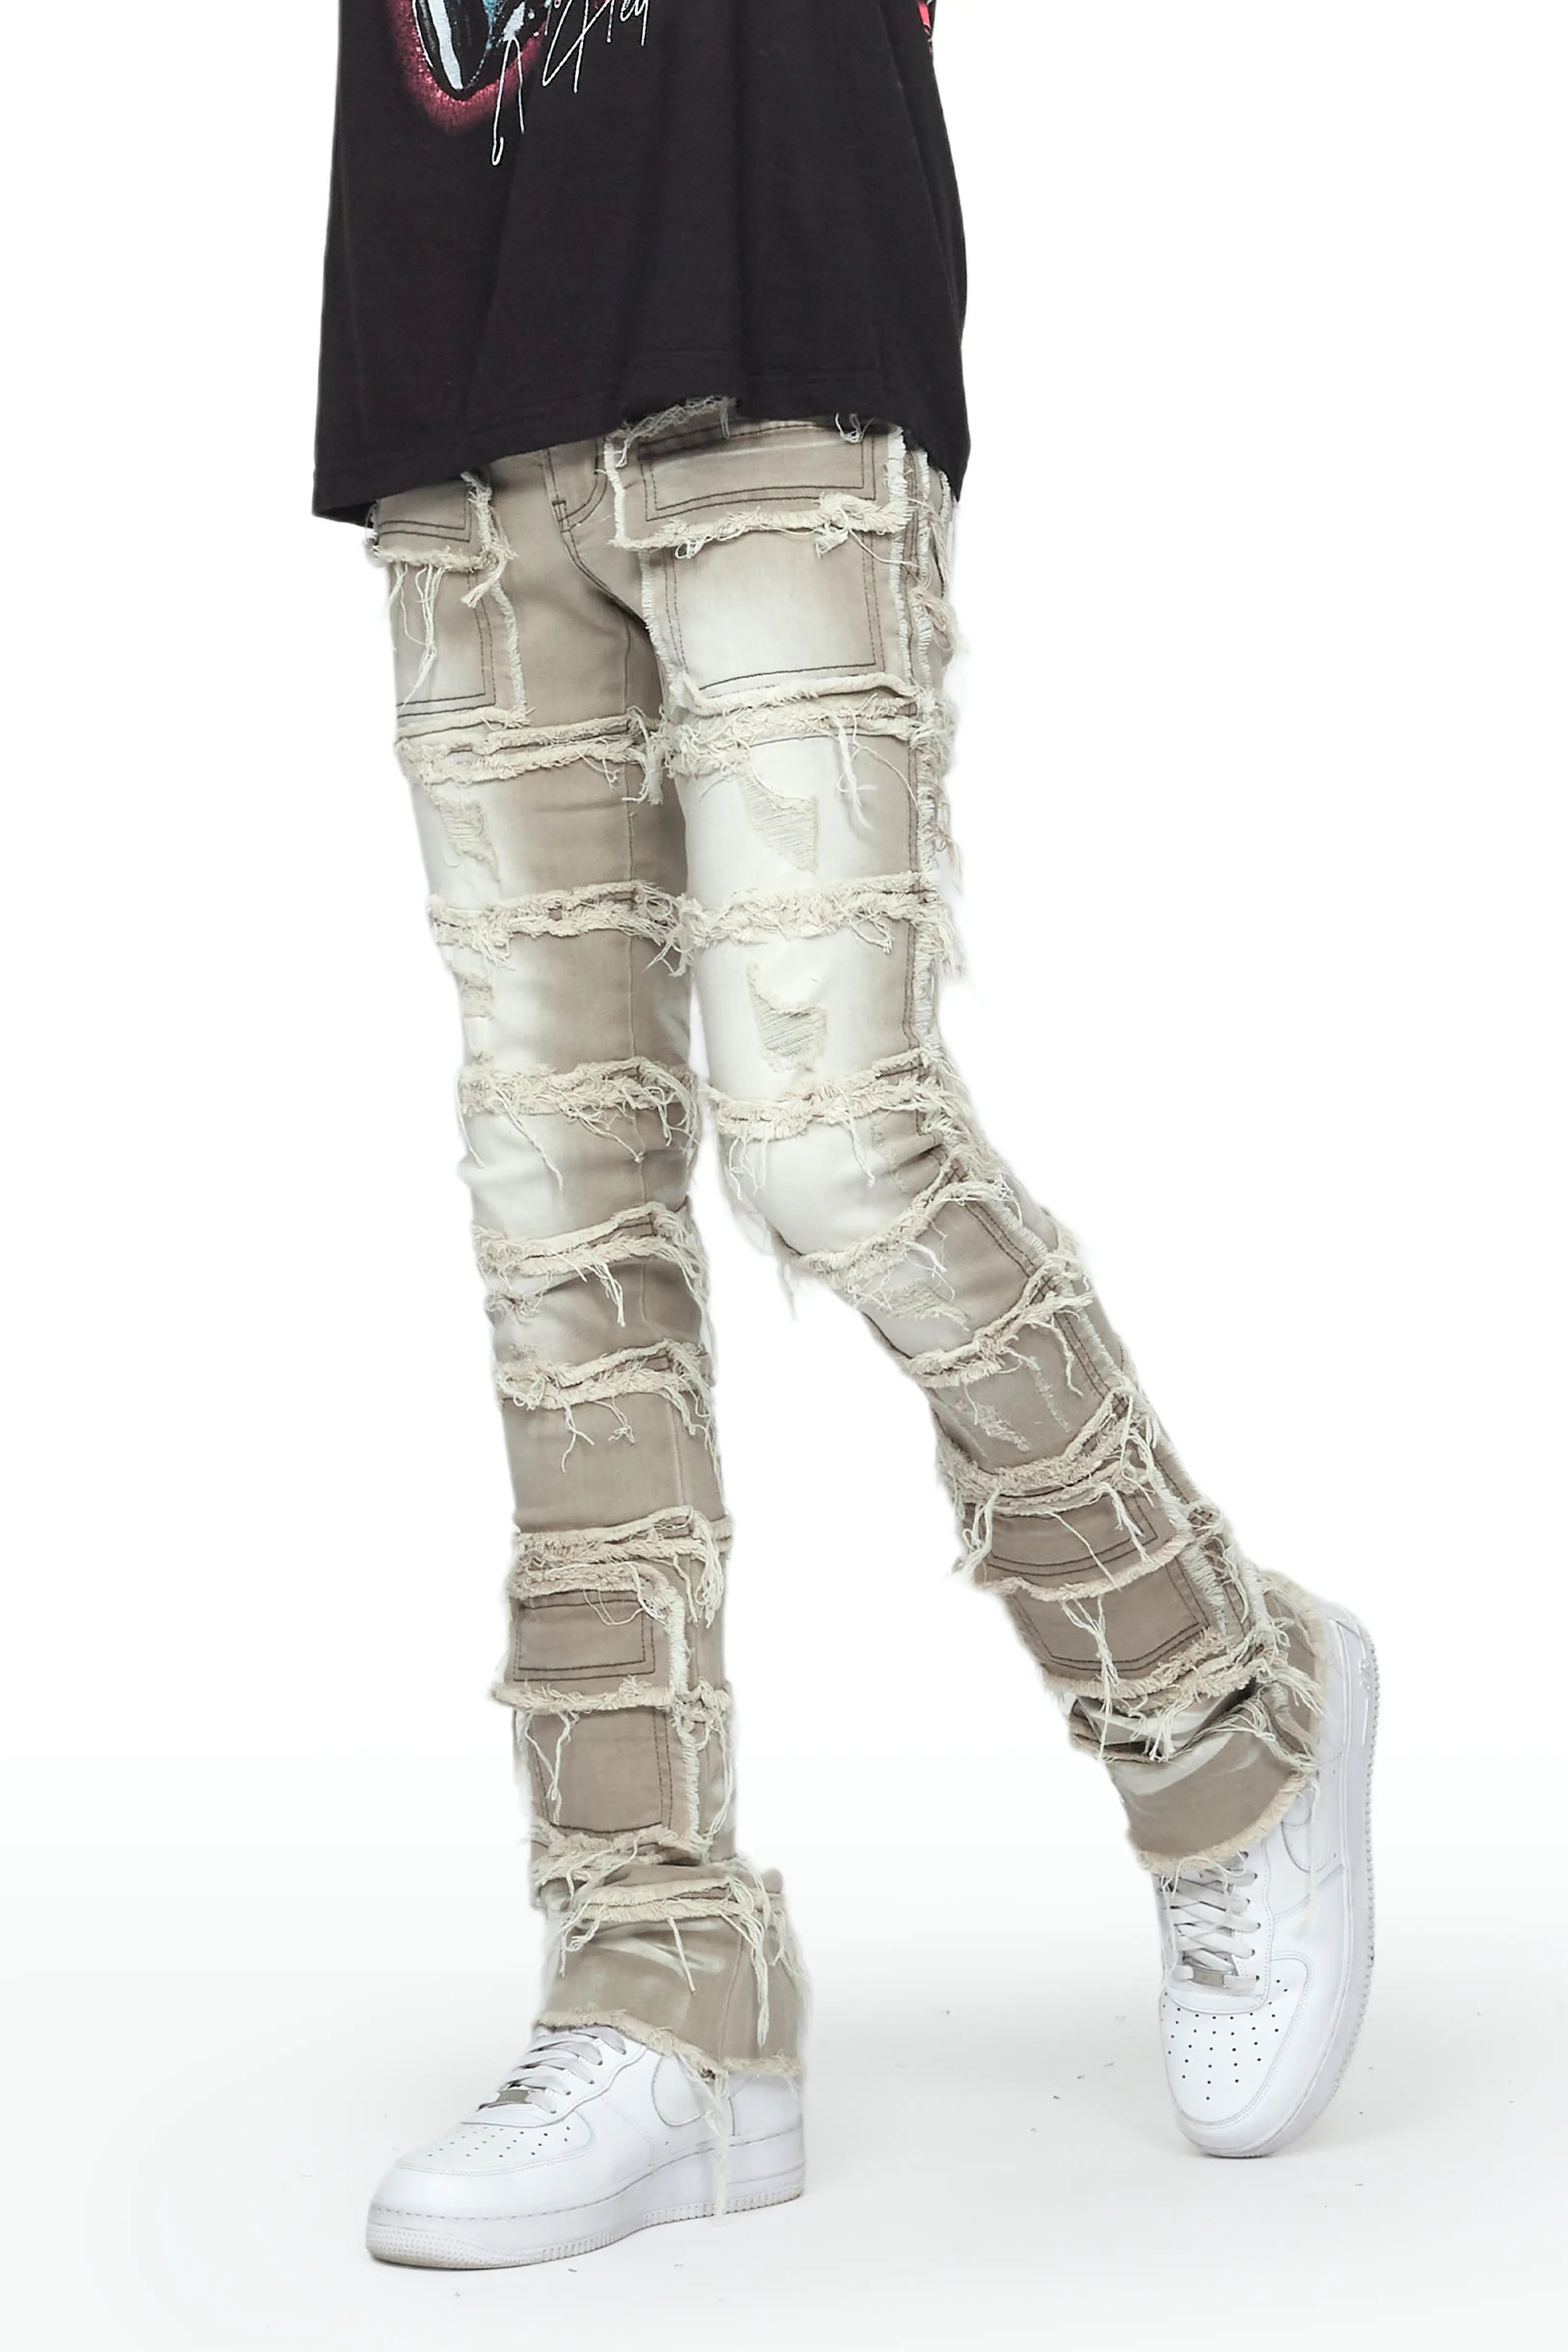 Jsezml Mens Ripped Jeans, Distressed Destroyed Slim Fit Straight Leg Denim  Pants Casual Fashion Comfort Pants - Walmart.com